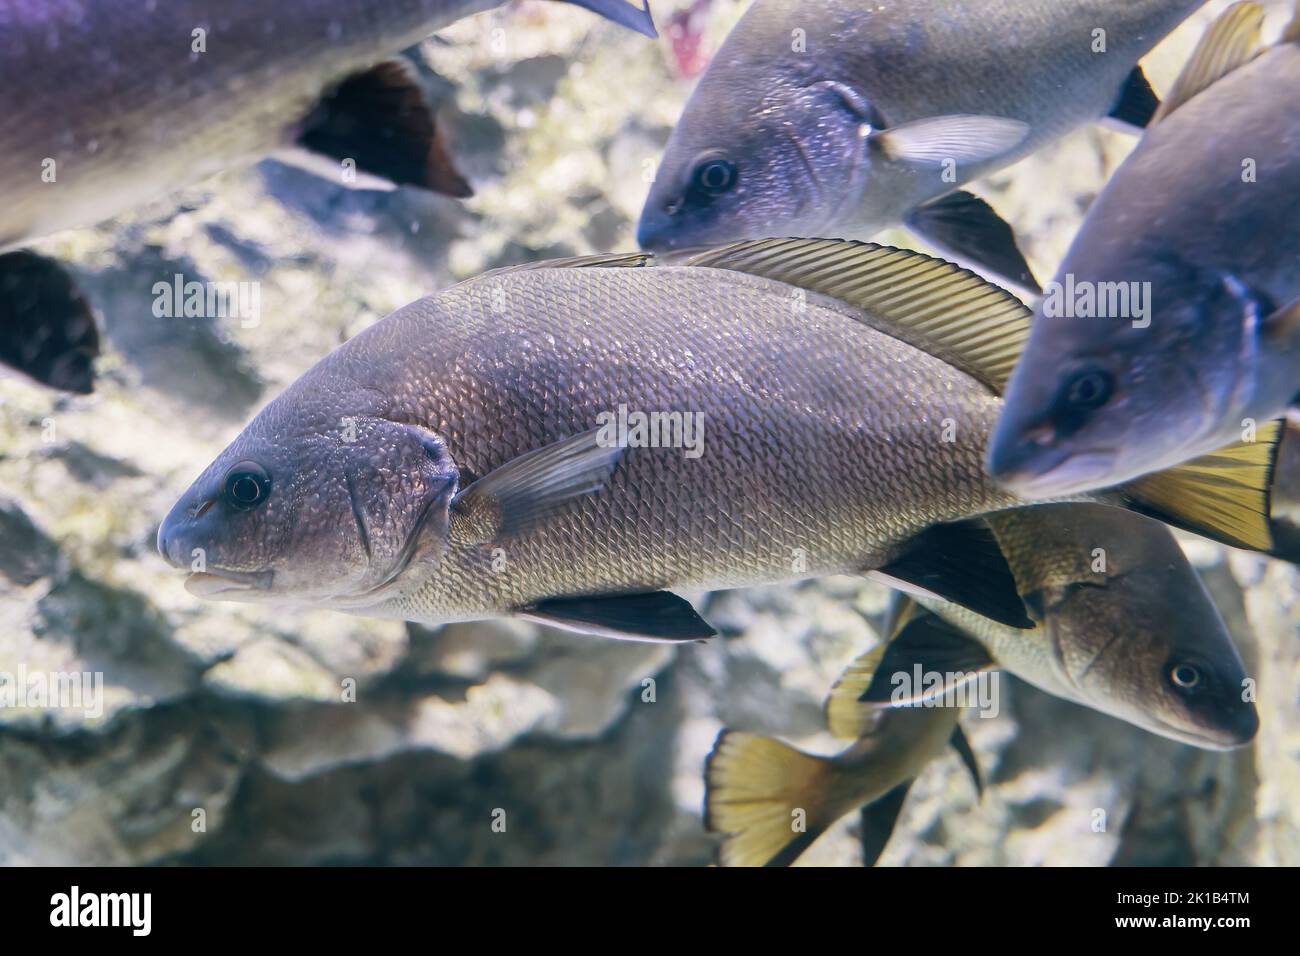 Brown meagre Sciaena umbra fish in the family Sciaenidae, region: Eastern Atlantic, Mediterranean Sea and Black Sea. Stock Photo